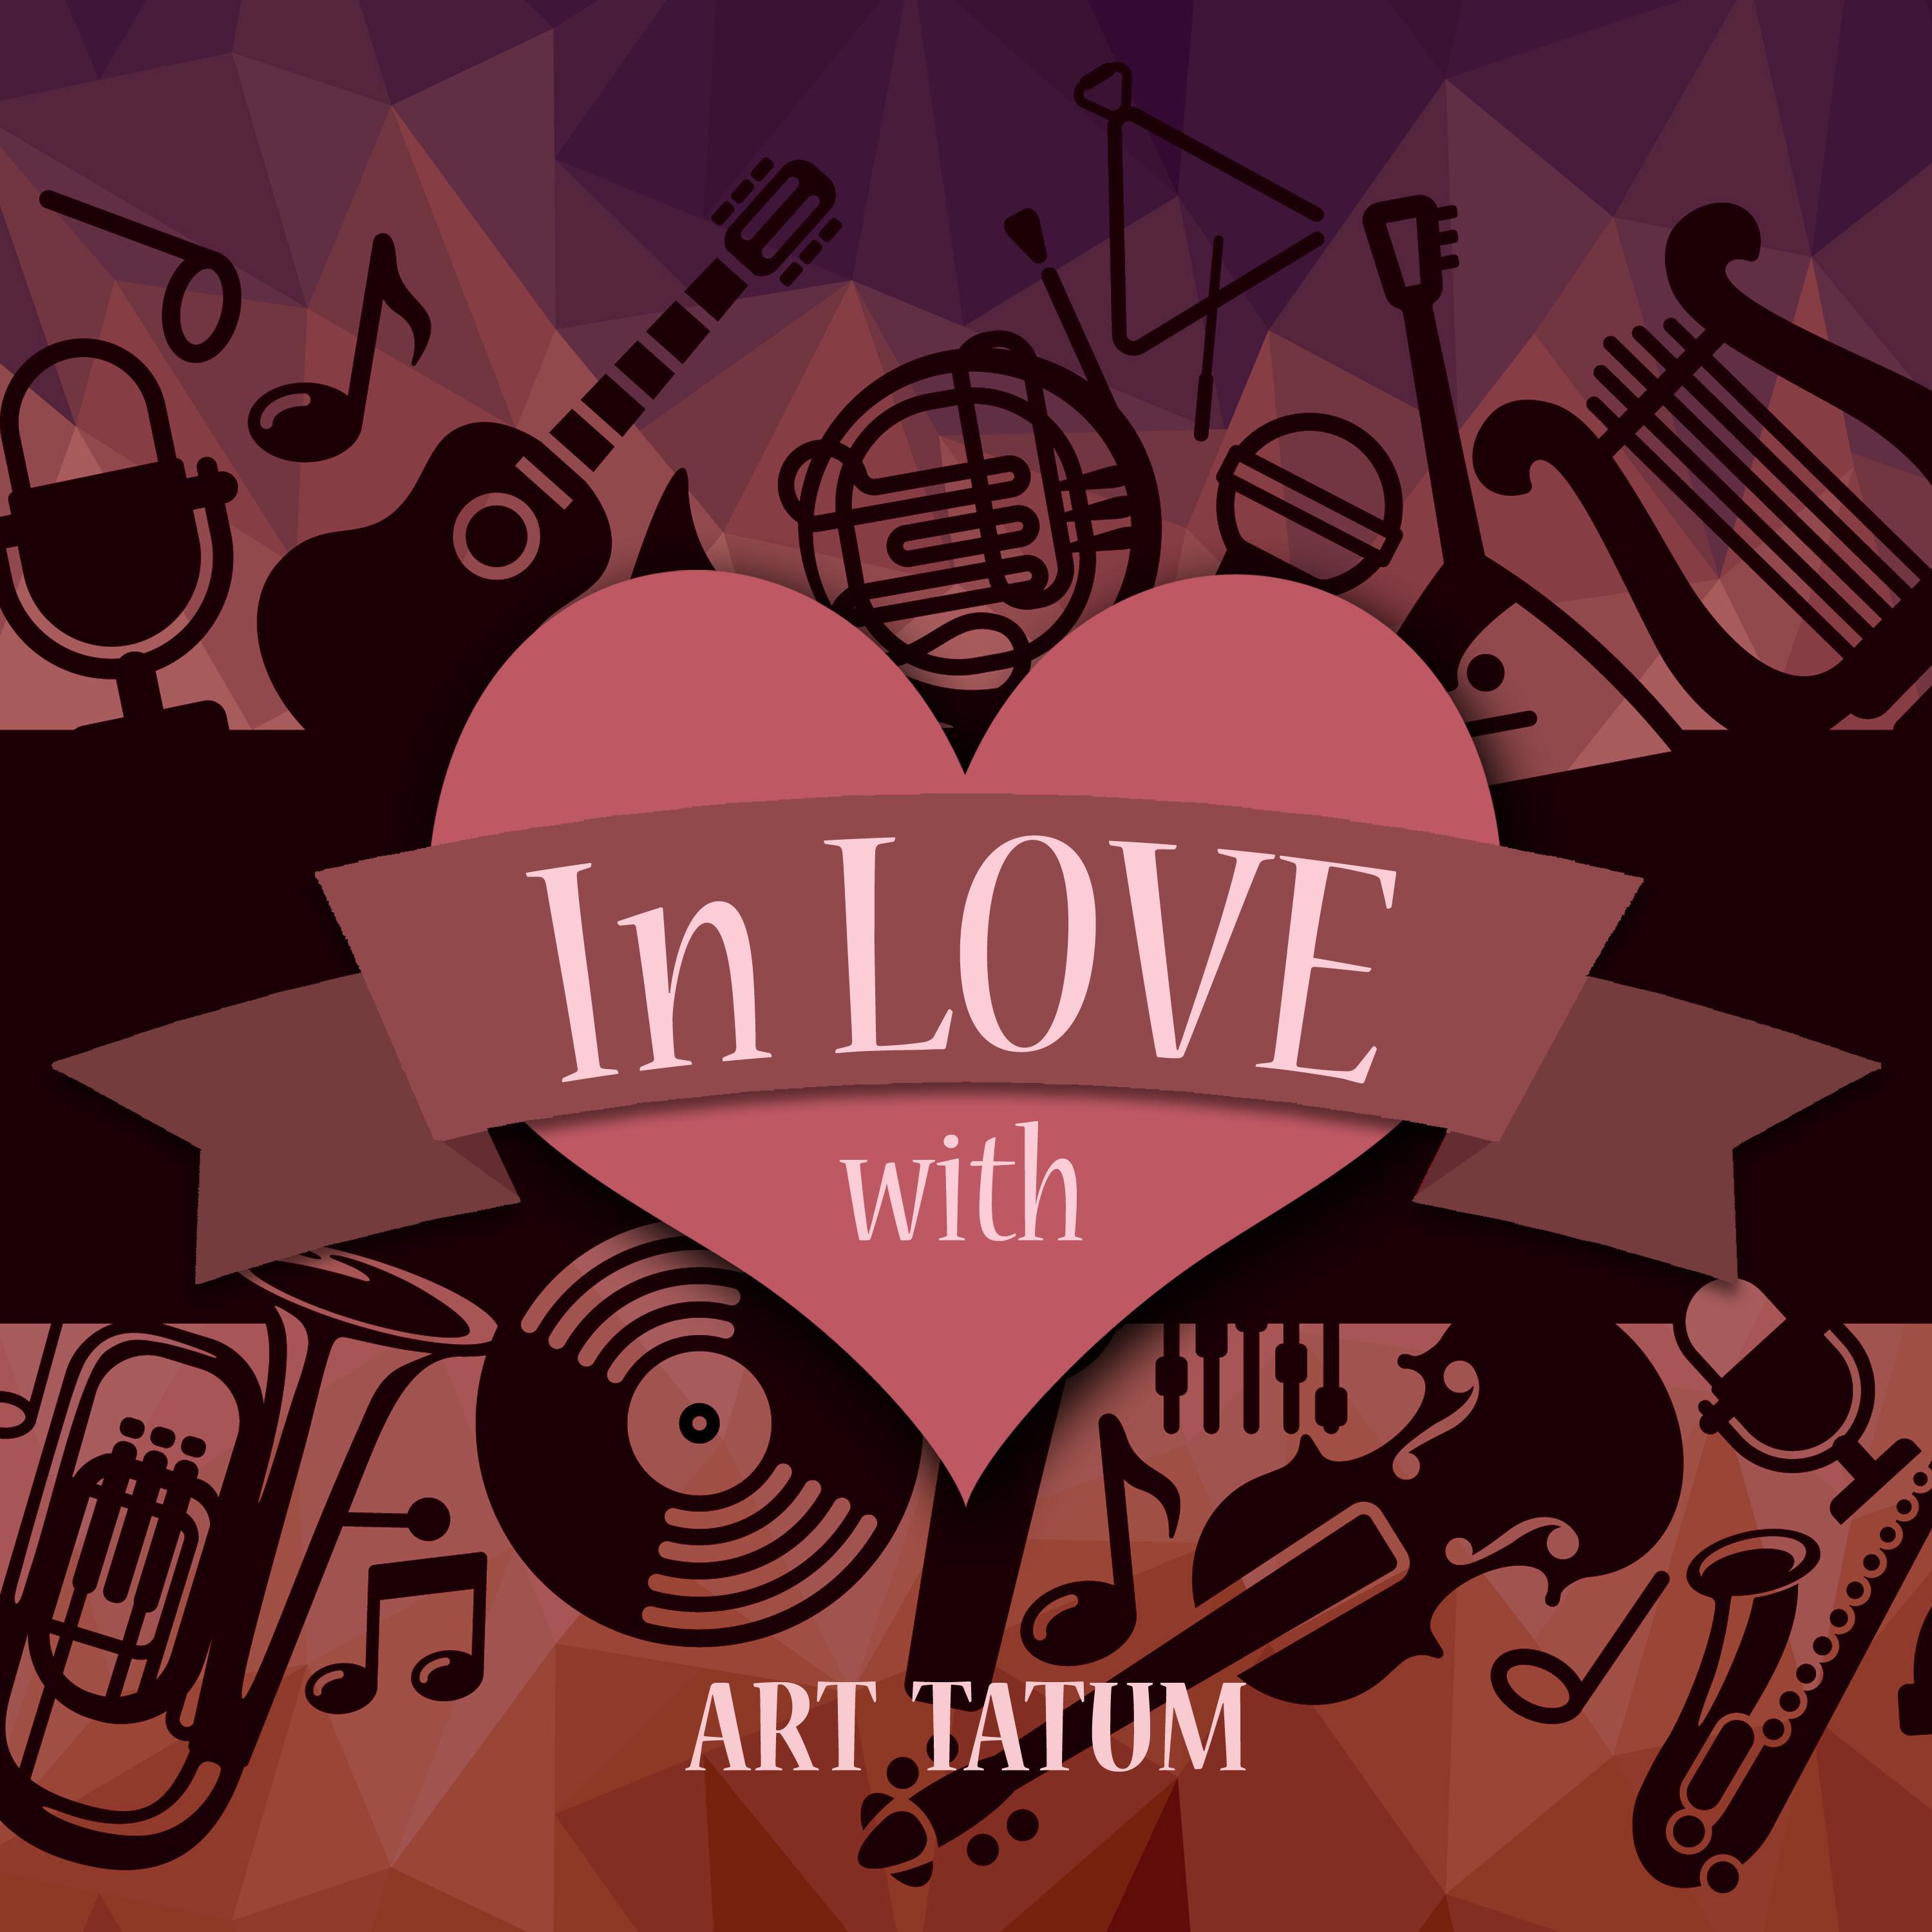 In Love with Art Tatum